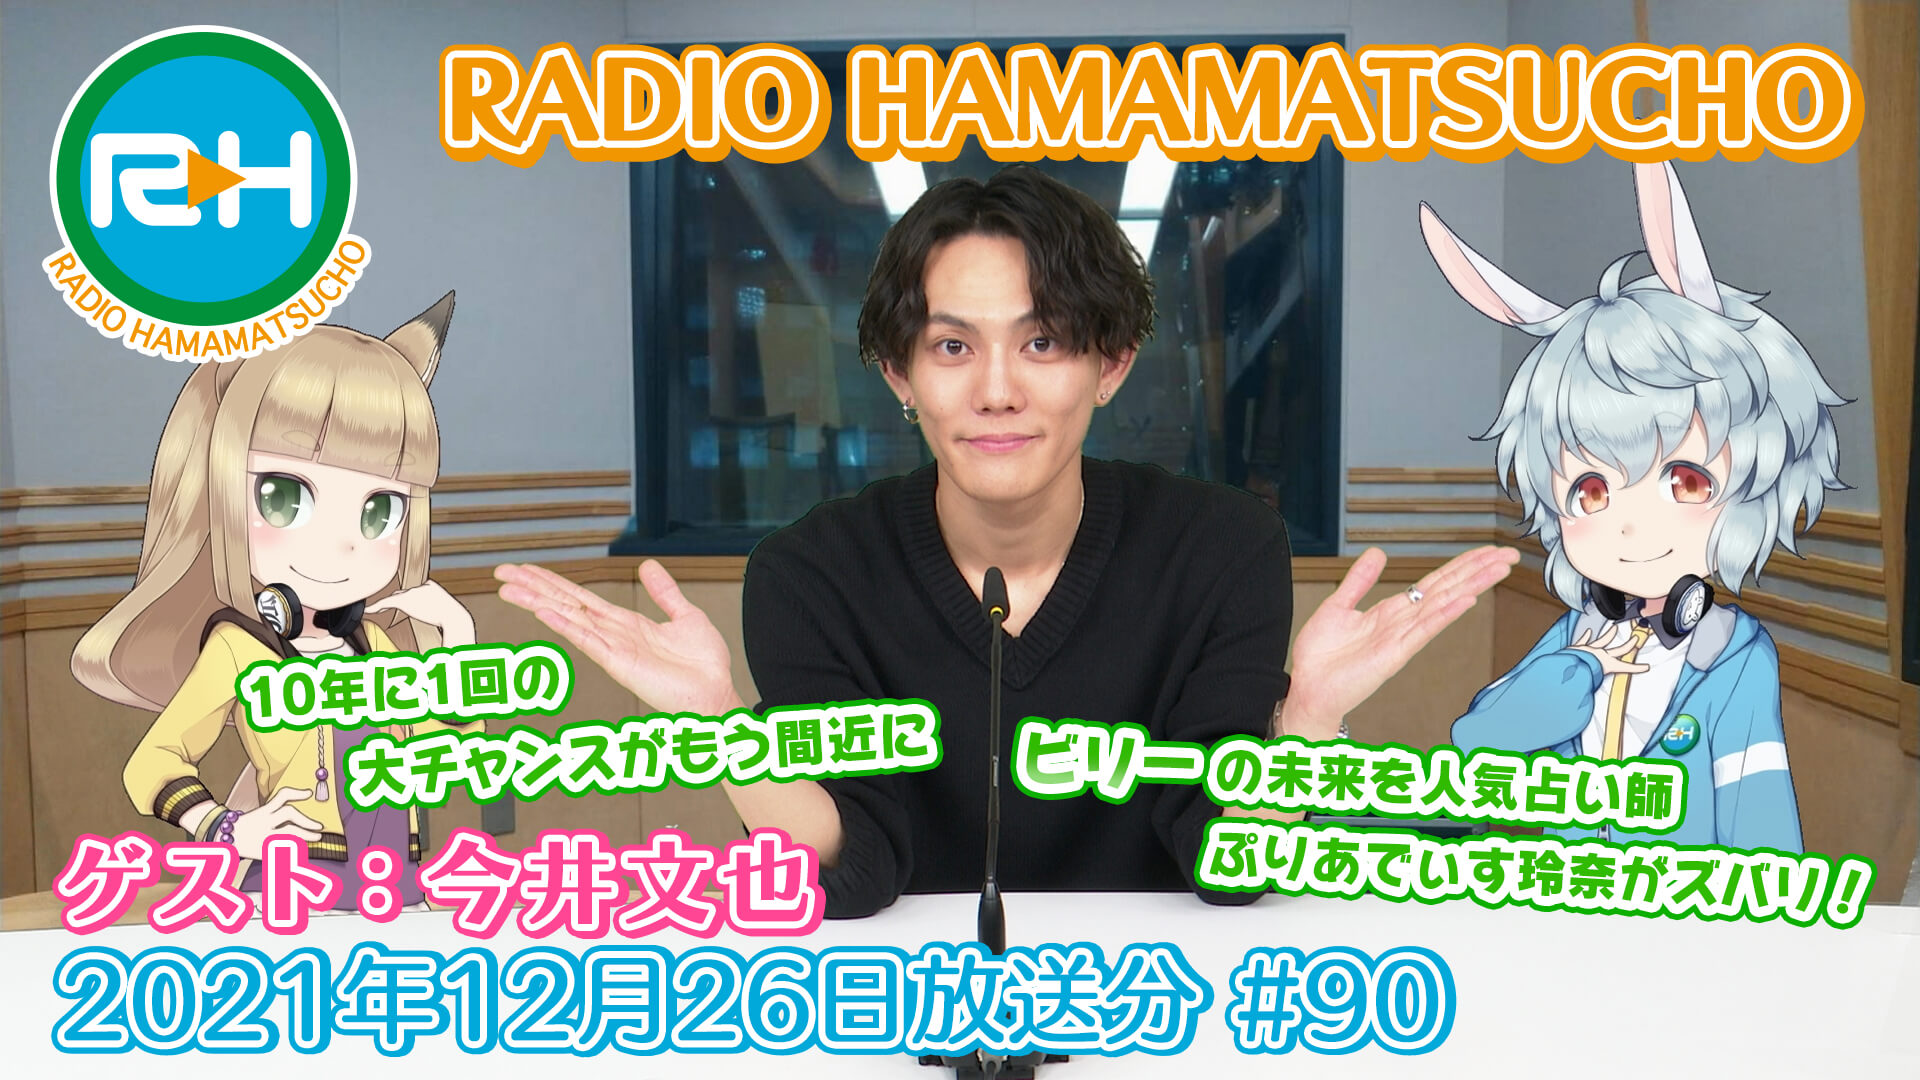 RADIO HAMAMATSUCHO 第90回 (2021年12月26日放送分) ゲスト: 今井文也